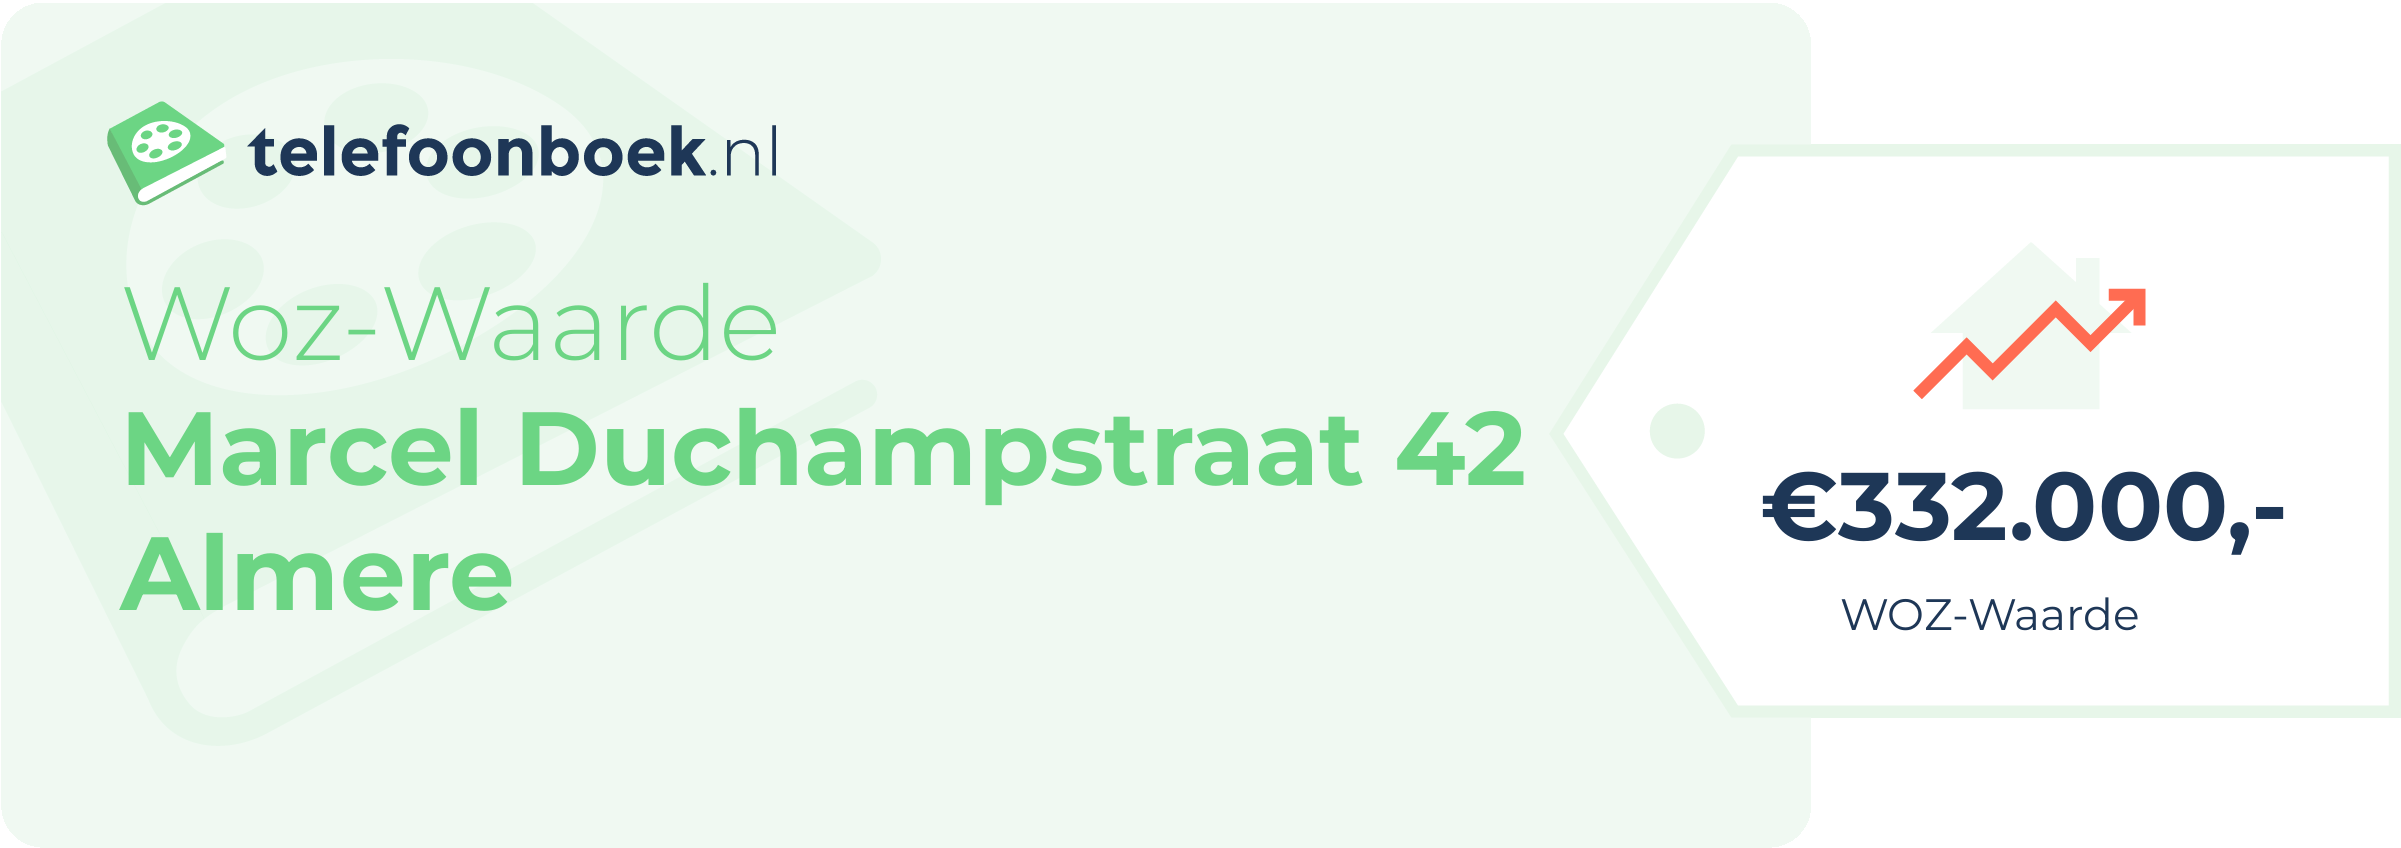 WOZ-waarde Marcel Duchampstraat 42 Almere